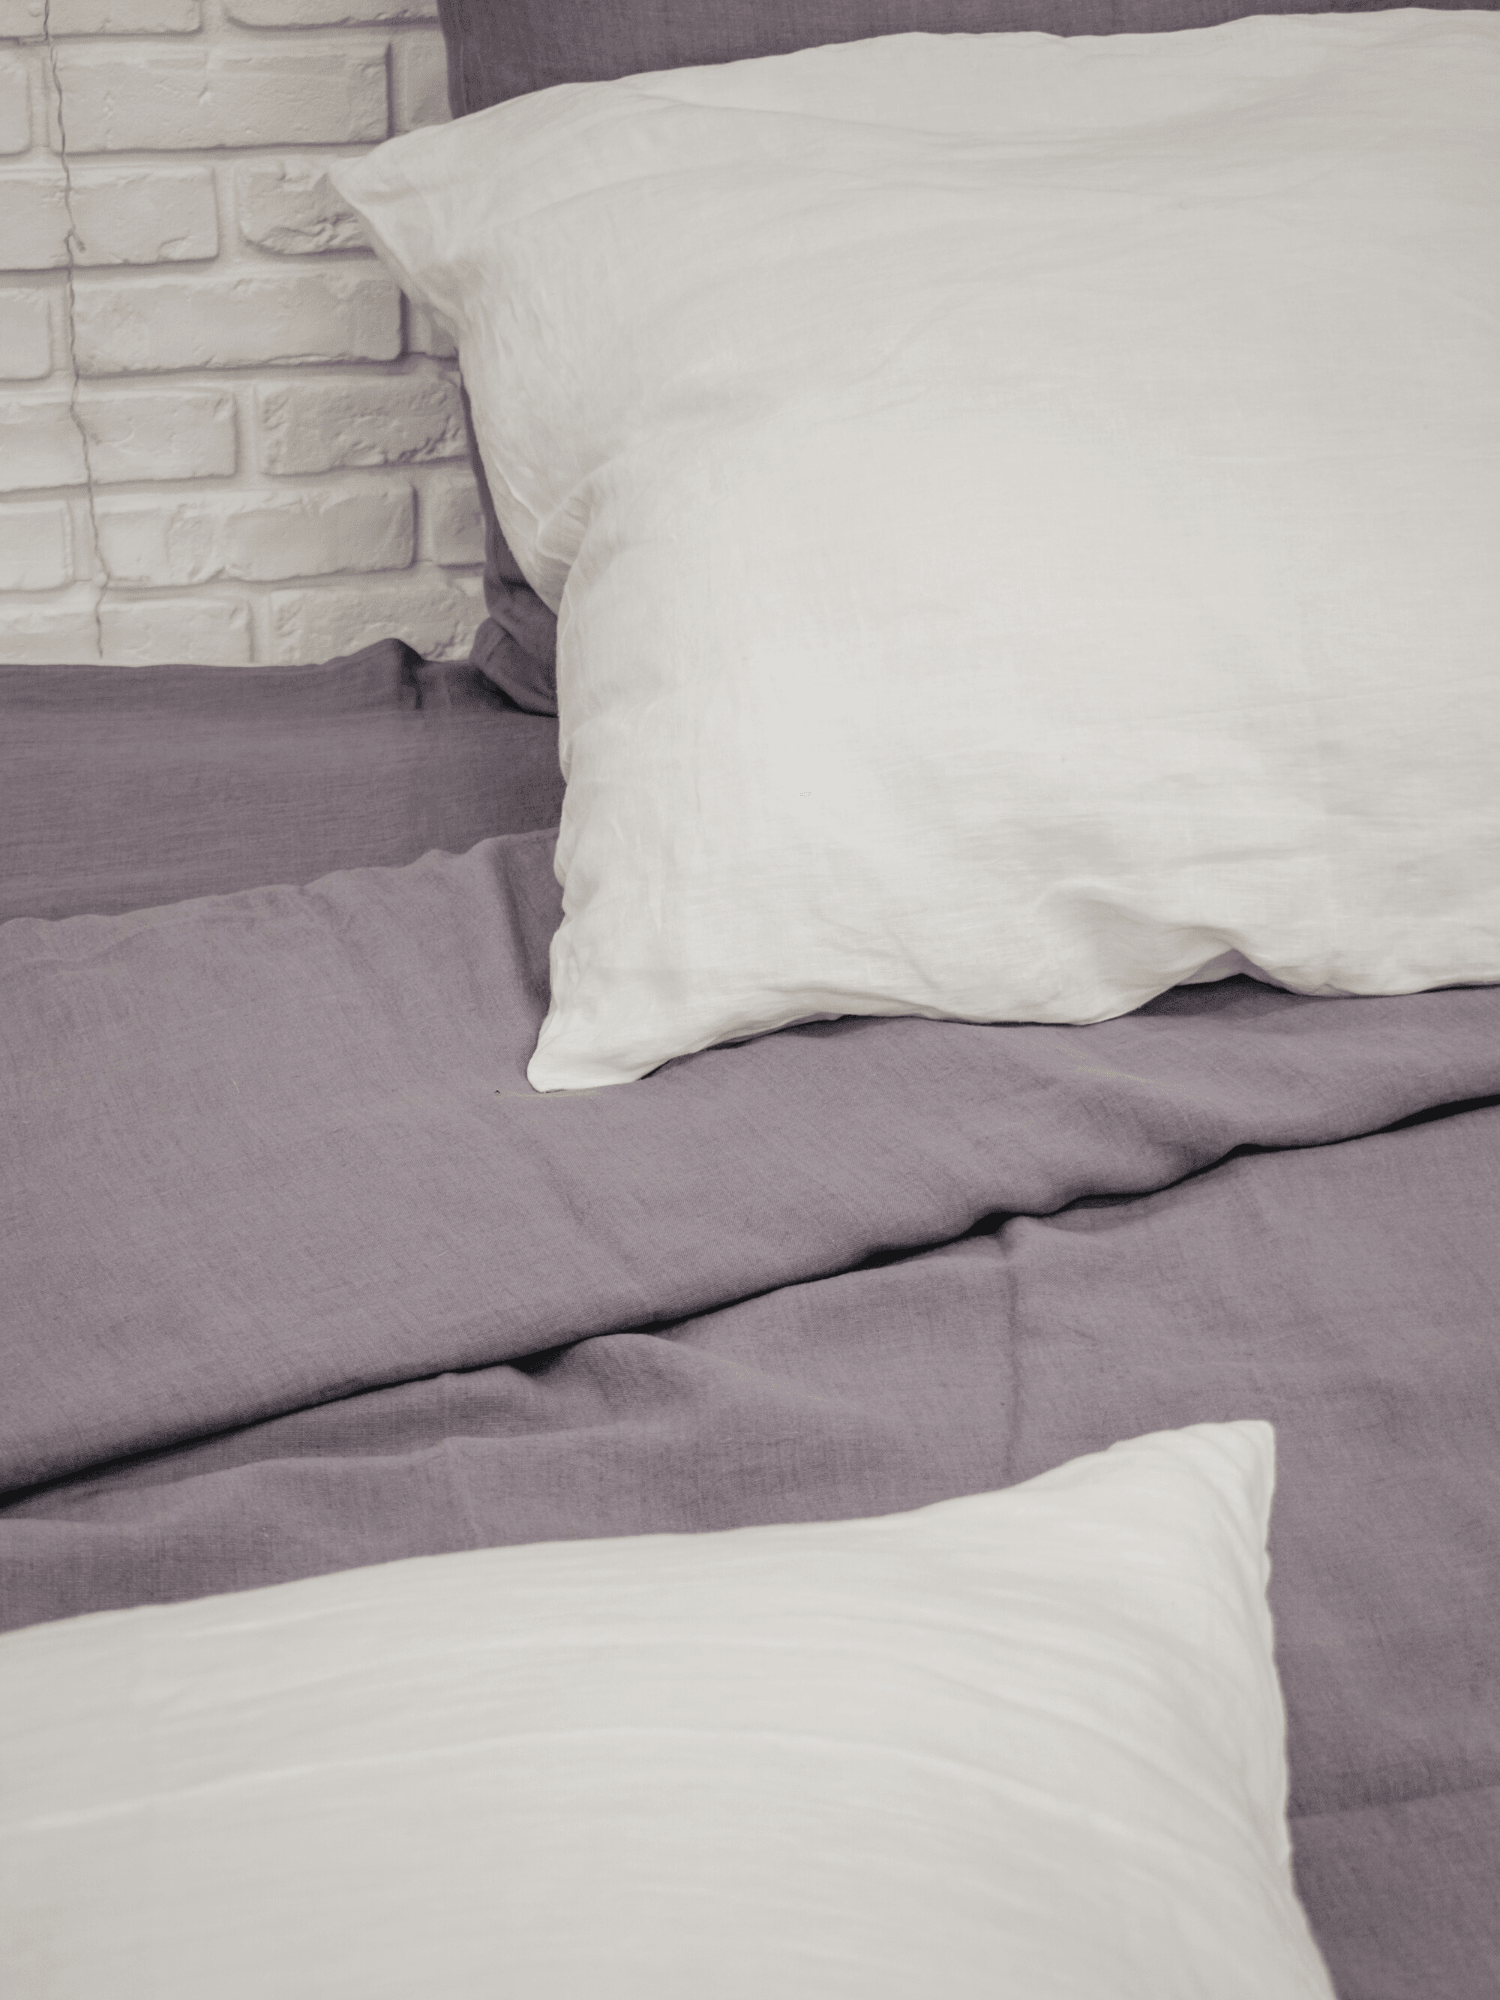 Family Soft Linen Bedding Set of Perfect Gray Color (includes 7 items) - Bedroom, Family Bedding Set, Linen bedding set - FlaxLin Eco Textiles